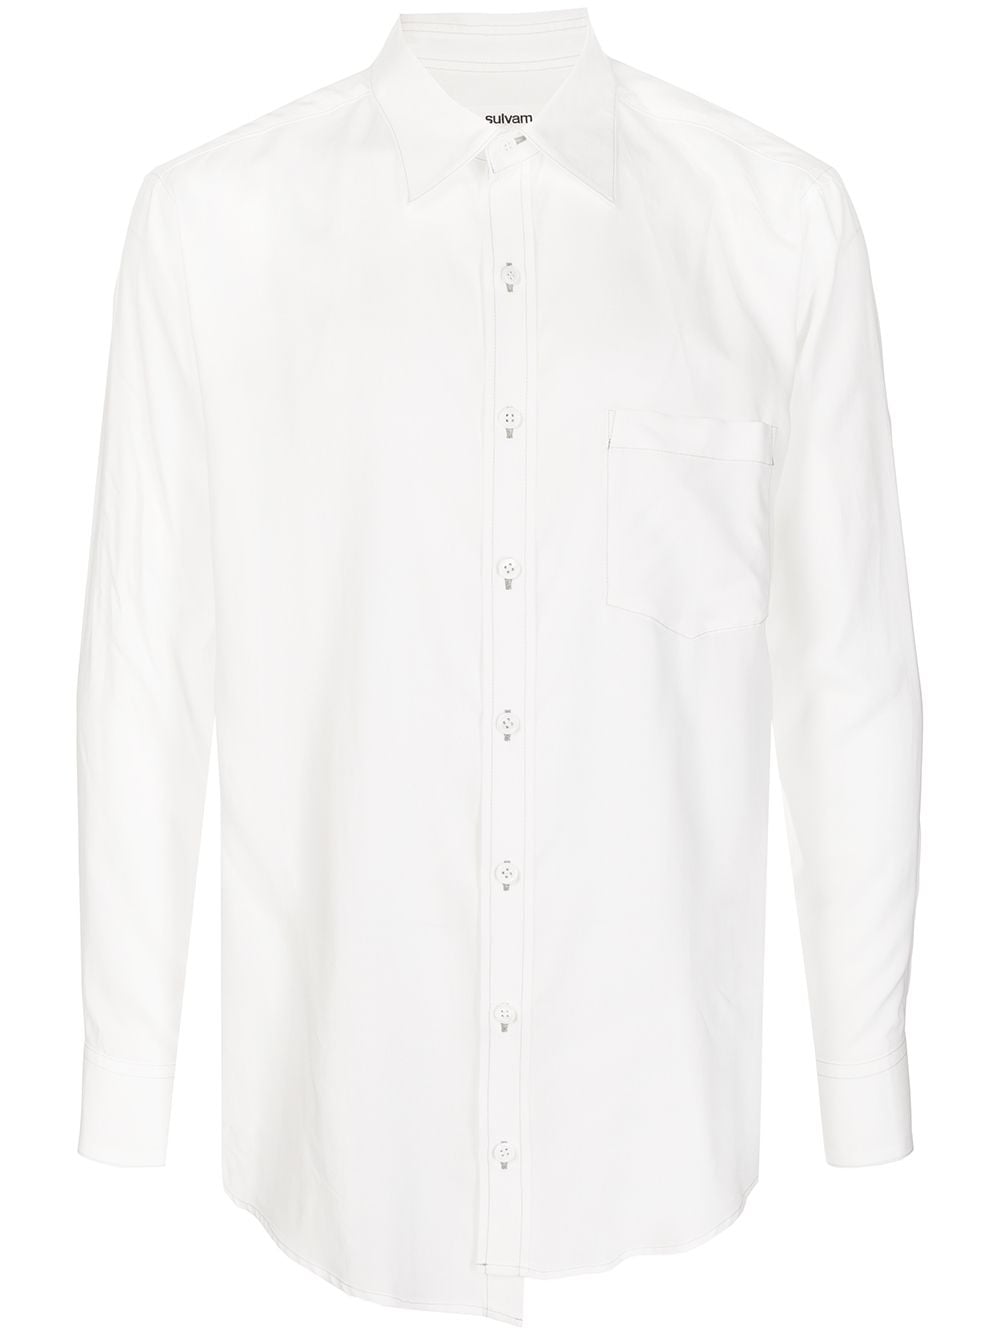 sulvam classic button-up shirt - White von sulvam